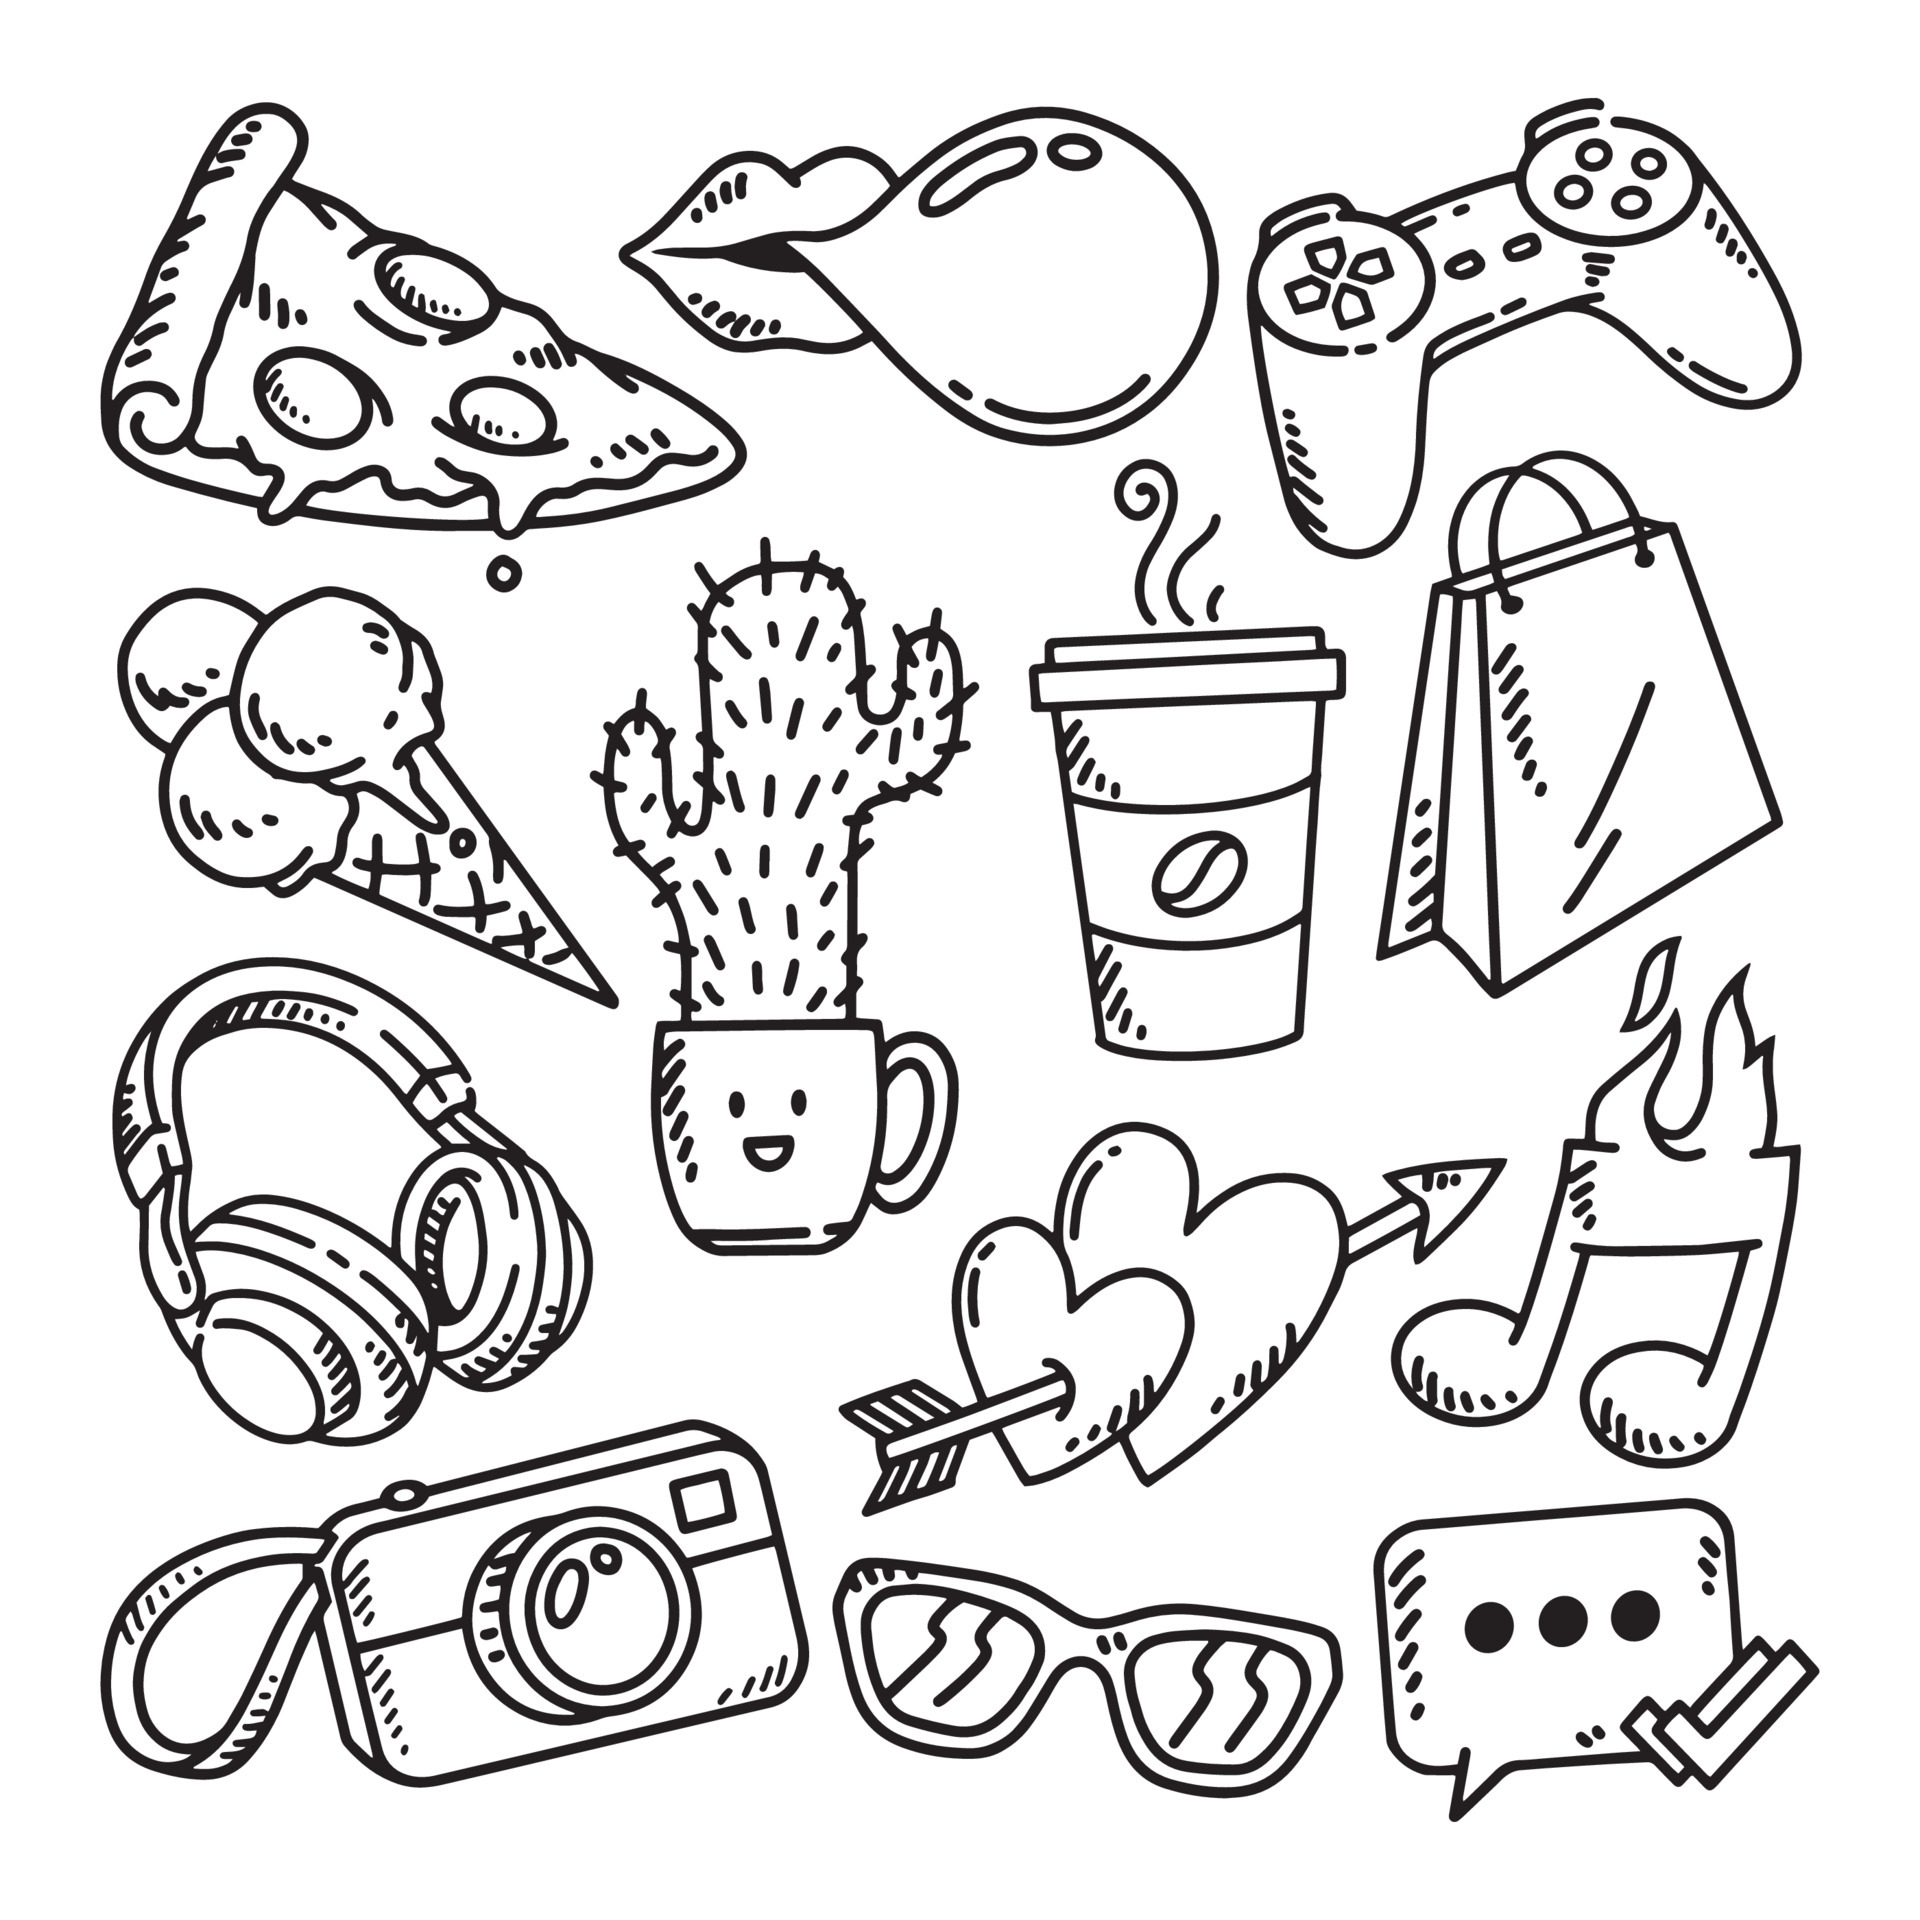 https://static.vecteezy.com/system/resources/previews/004/464/292/original/doodle-teenagers-set-line-illustration-vector.jpg